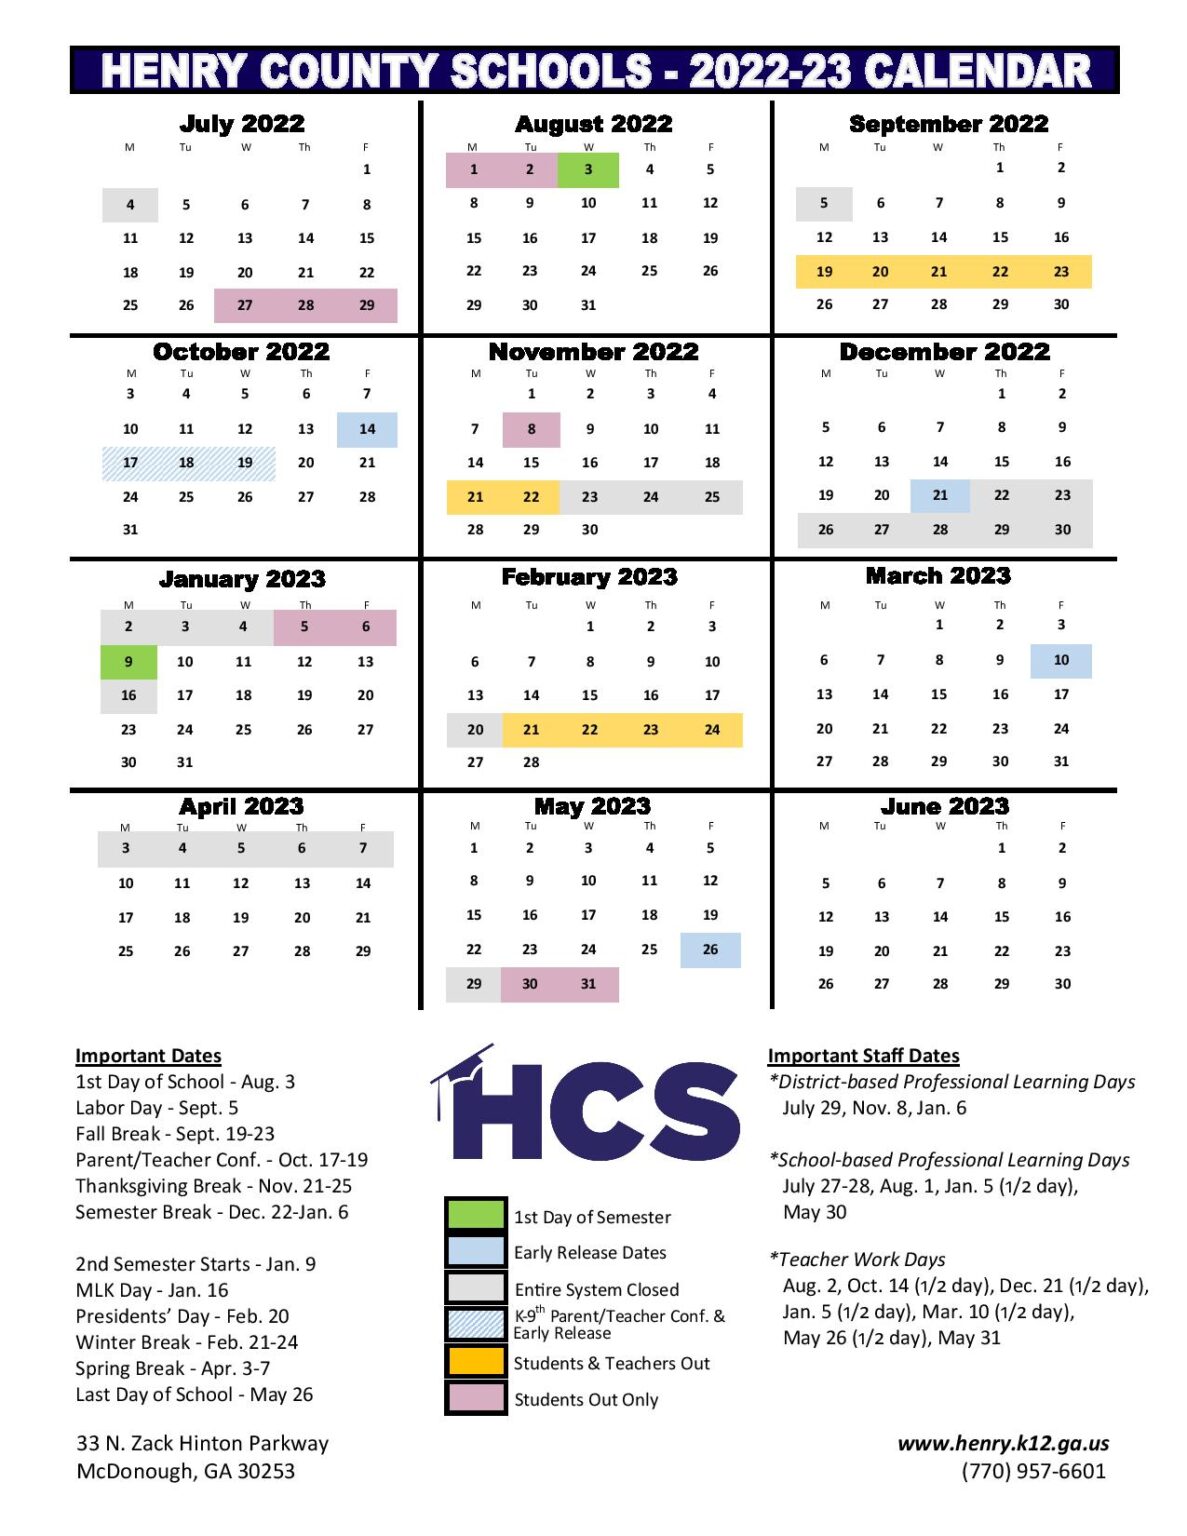 Henry County School Calendar 2022-2023 in PDF